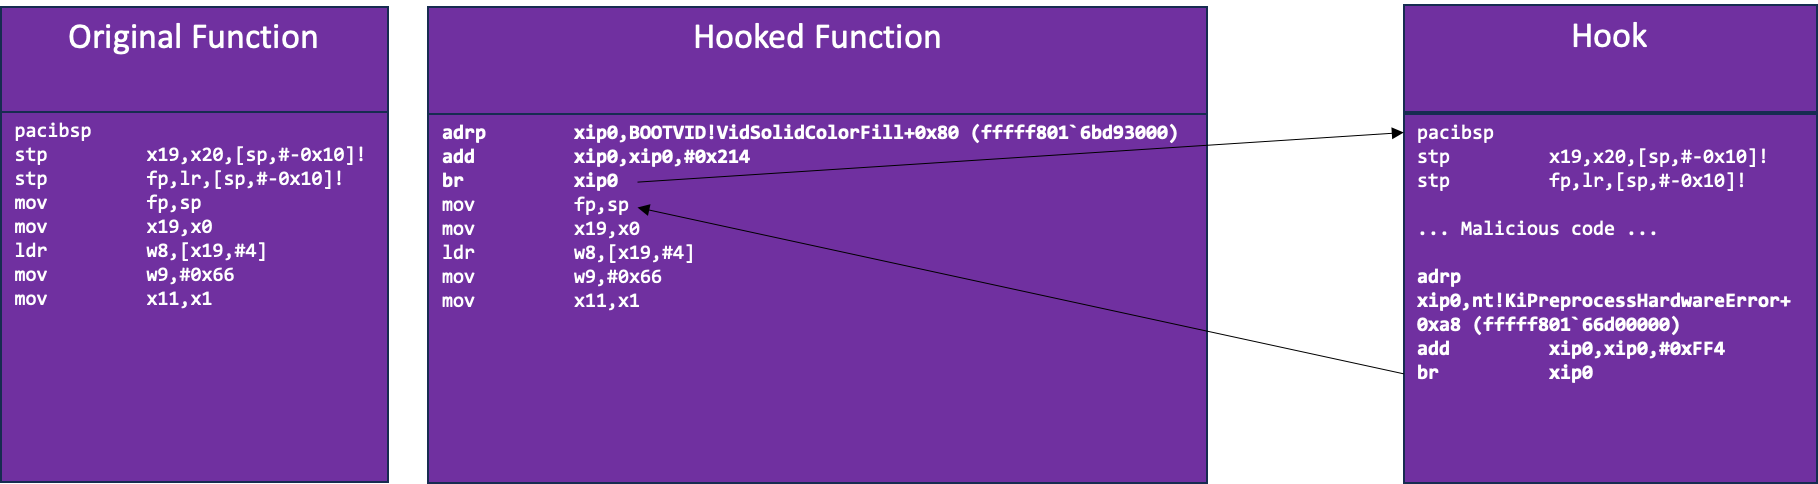 Original Function vs. Hooked Function